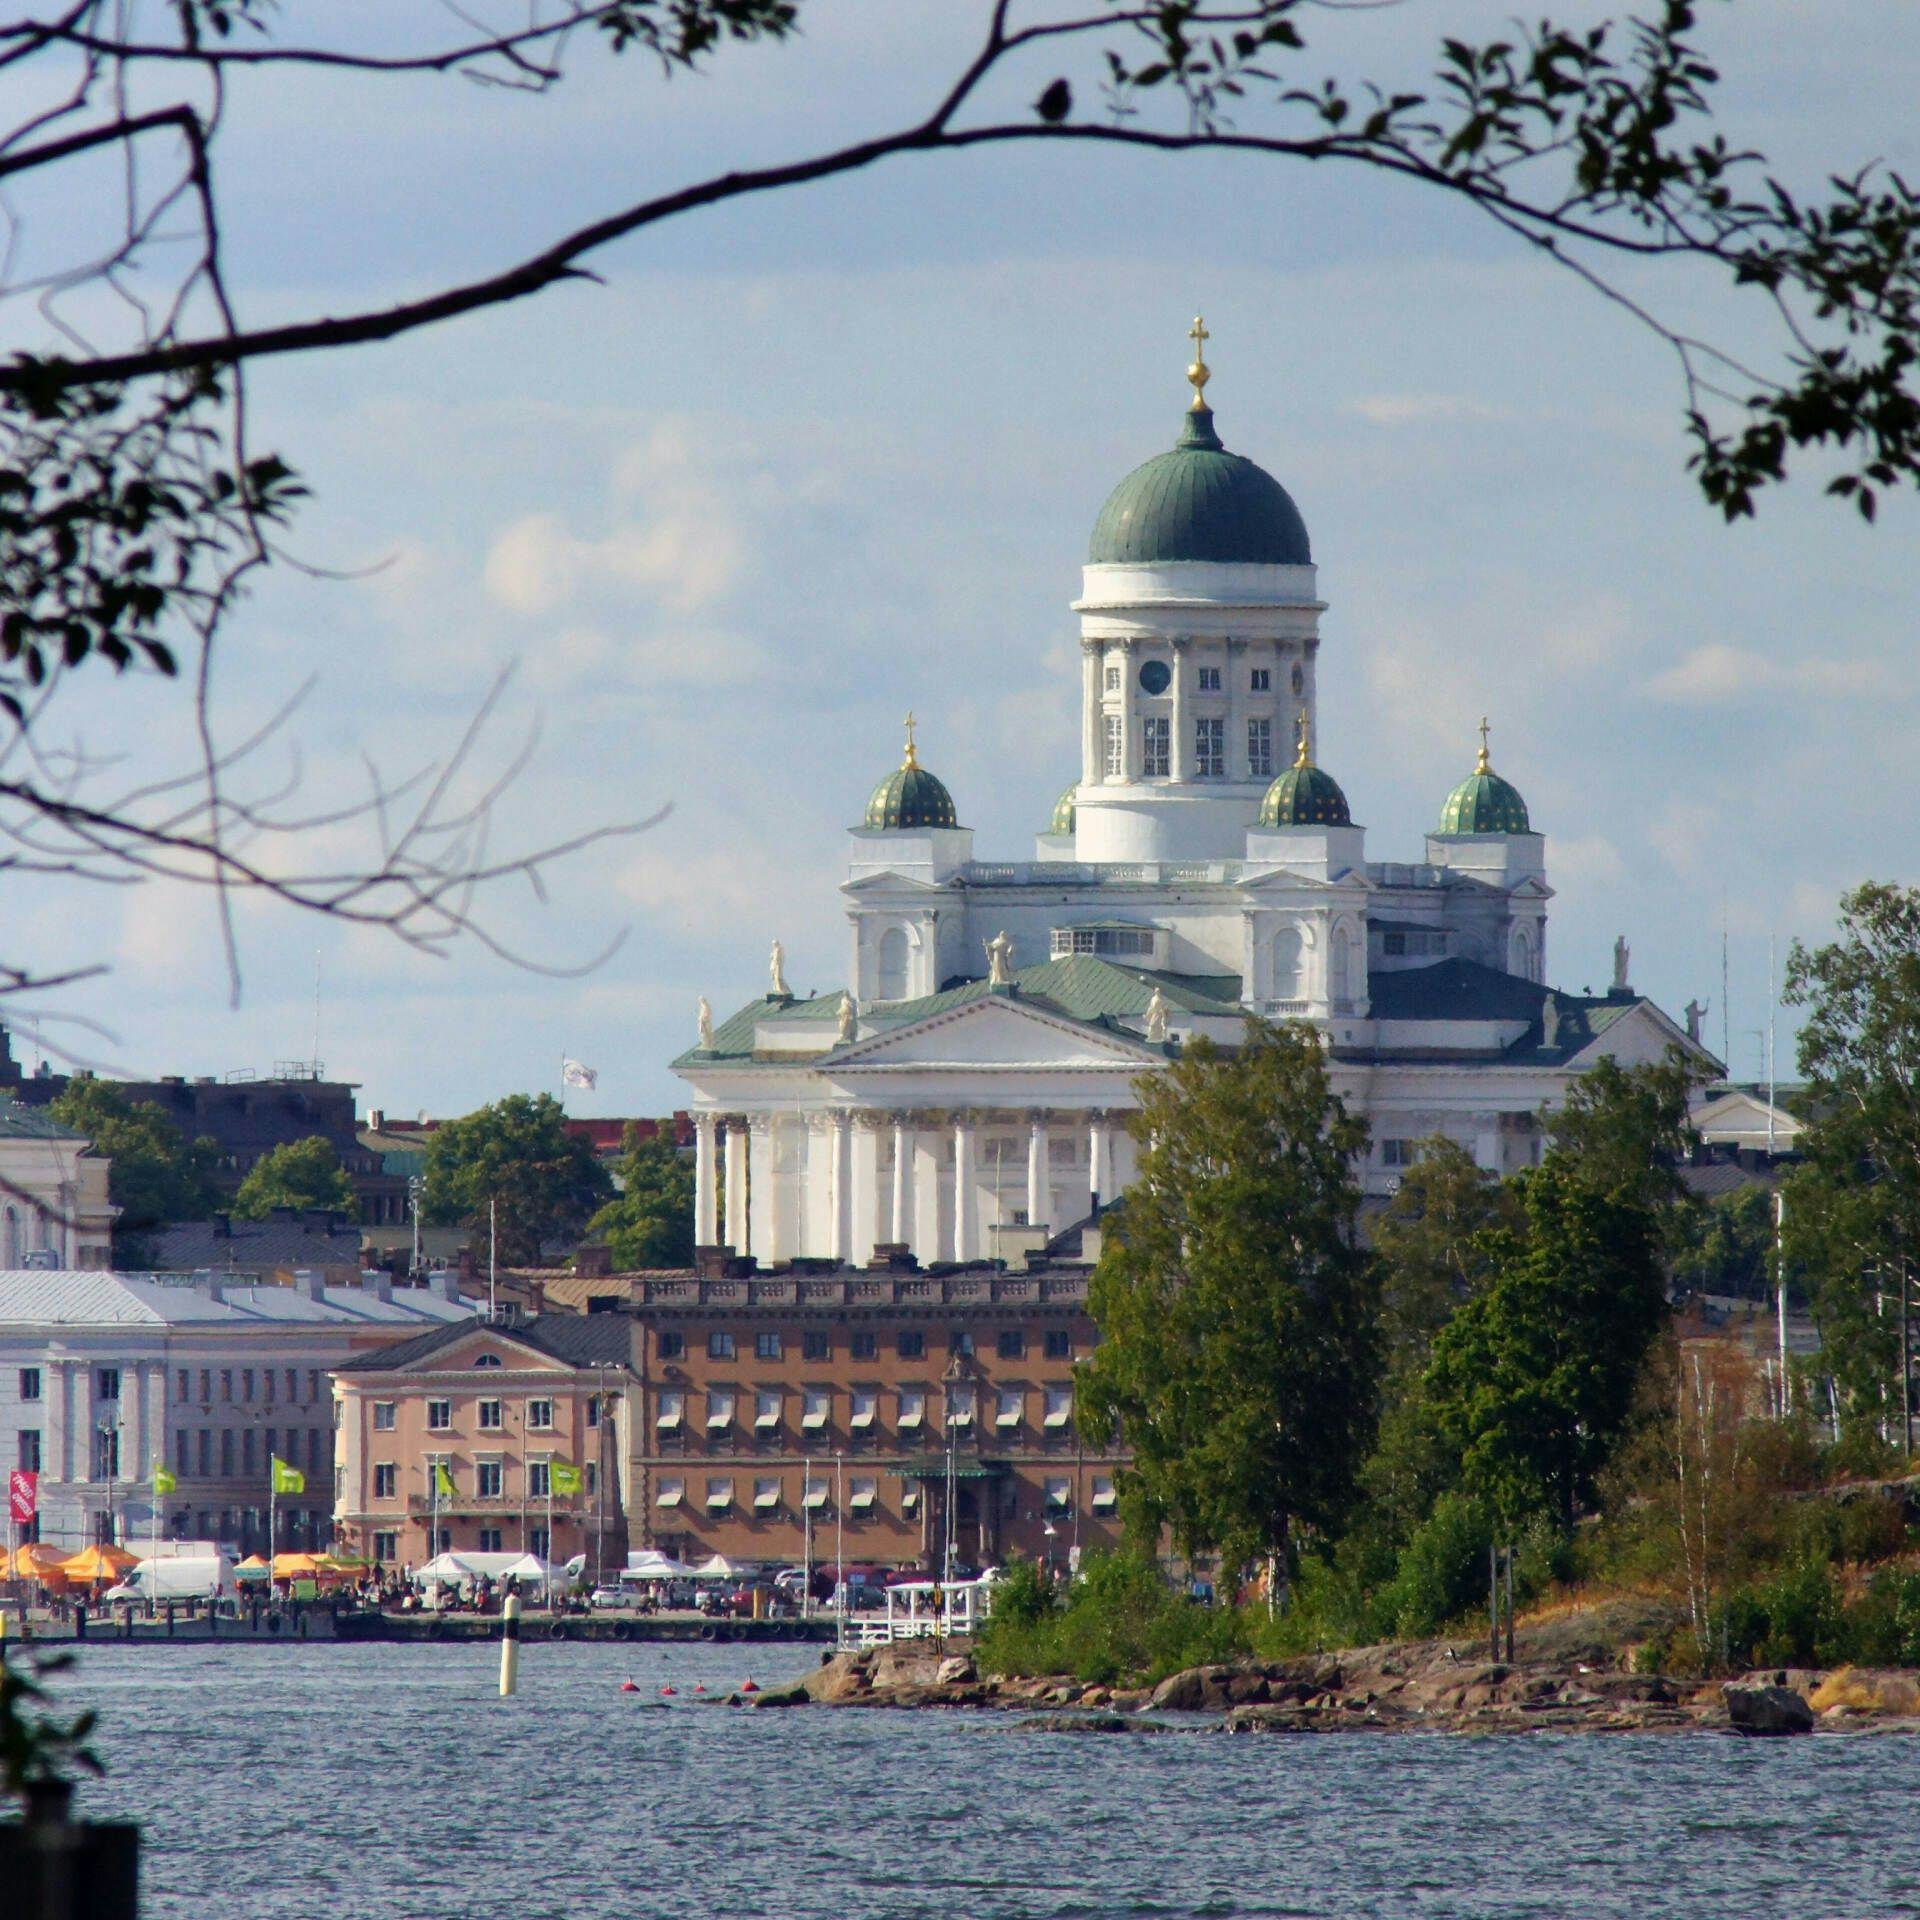 Moving to Helsinki